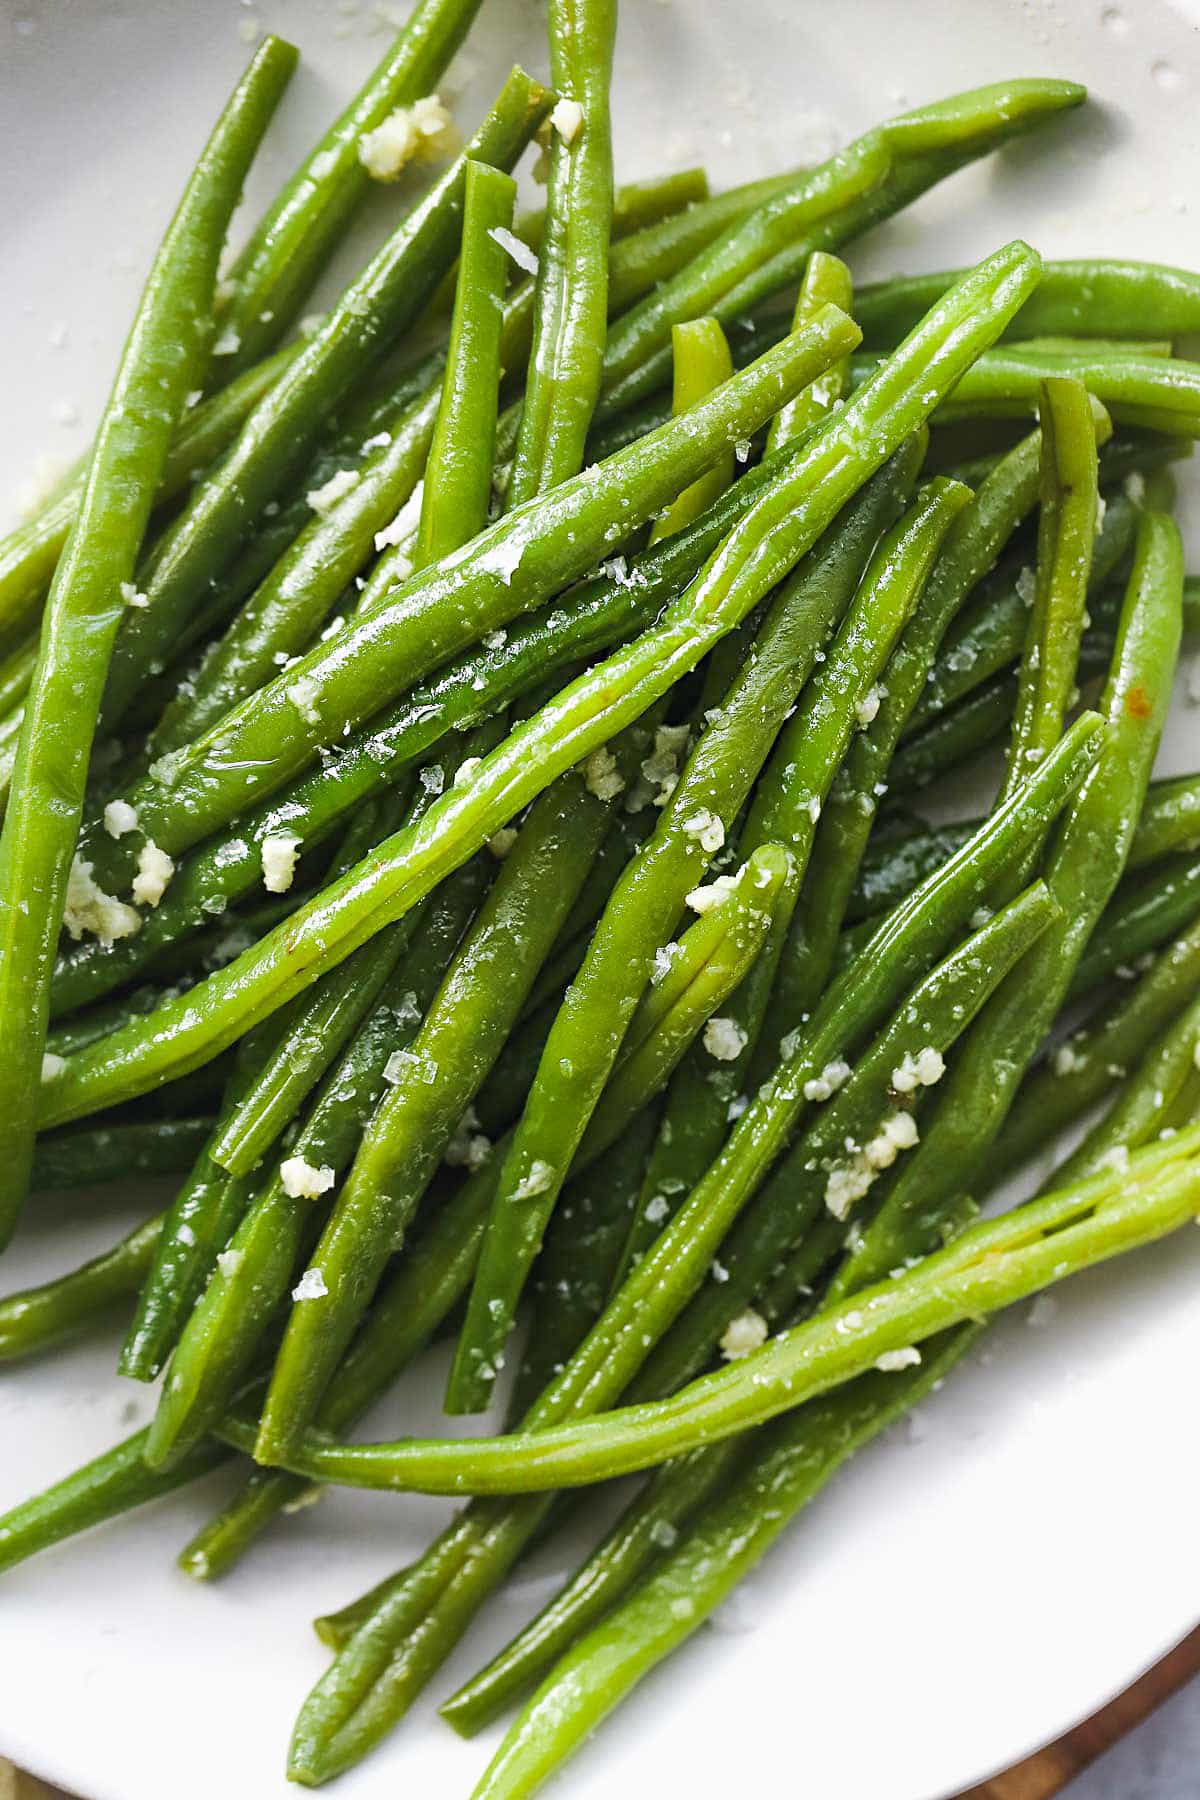 A close up shot of the garlic green beans